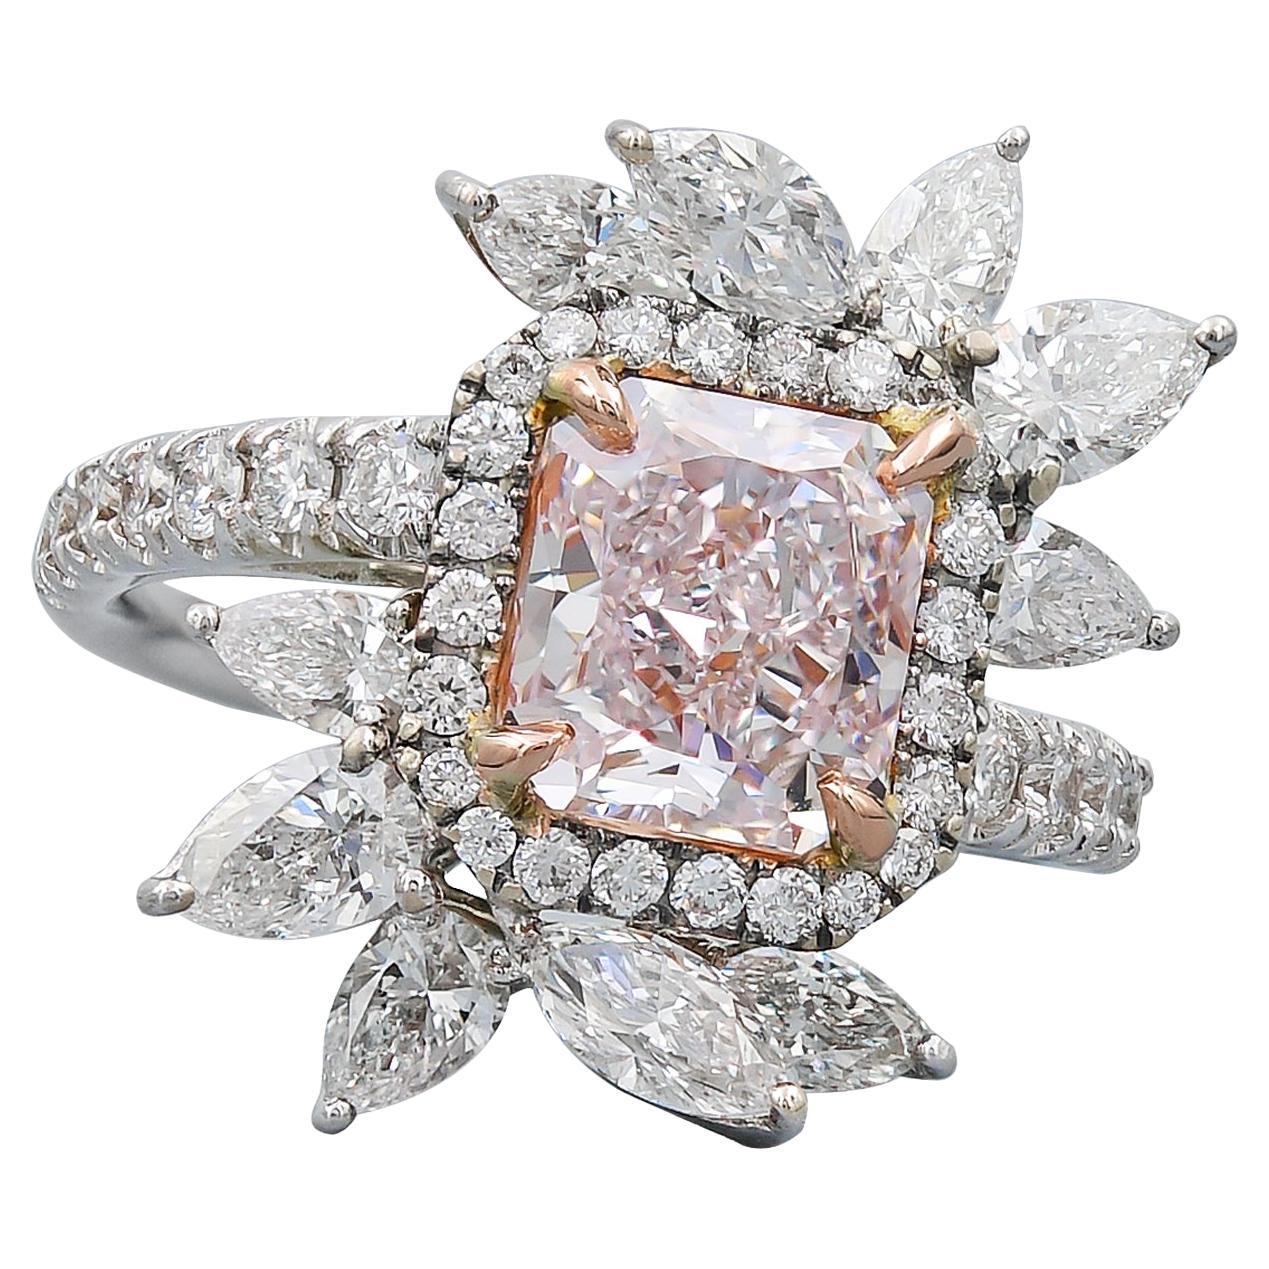 Spectra Fine Jewlery, GIA Certified 2.62 Carat Pink Diamond Cocktail Ring